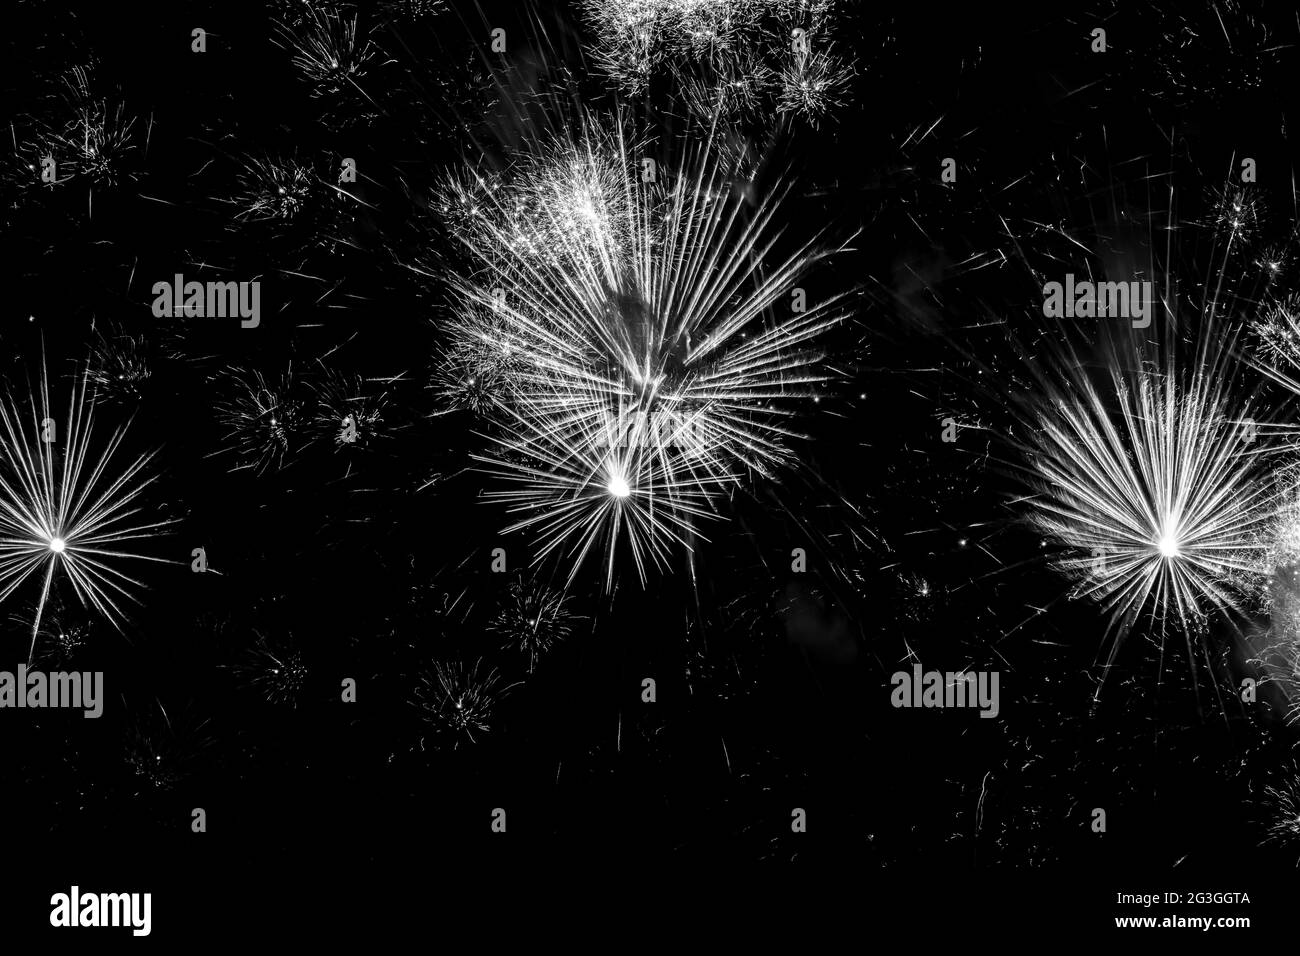 Black and white fireworks across a black night sky Stock Photo